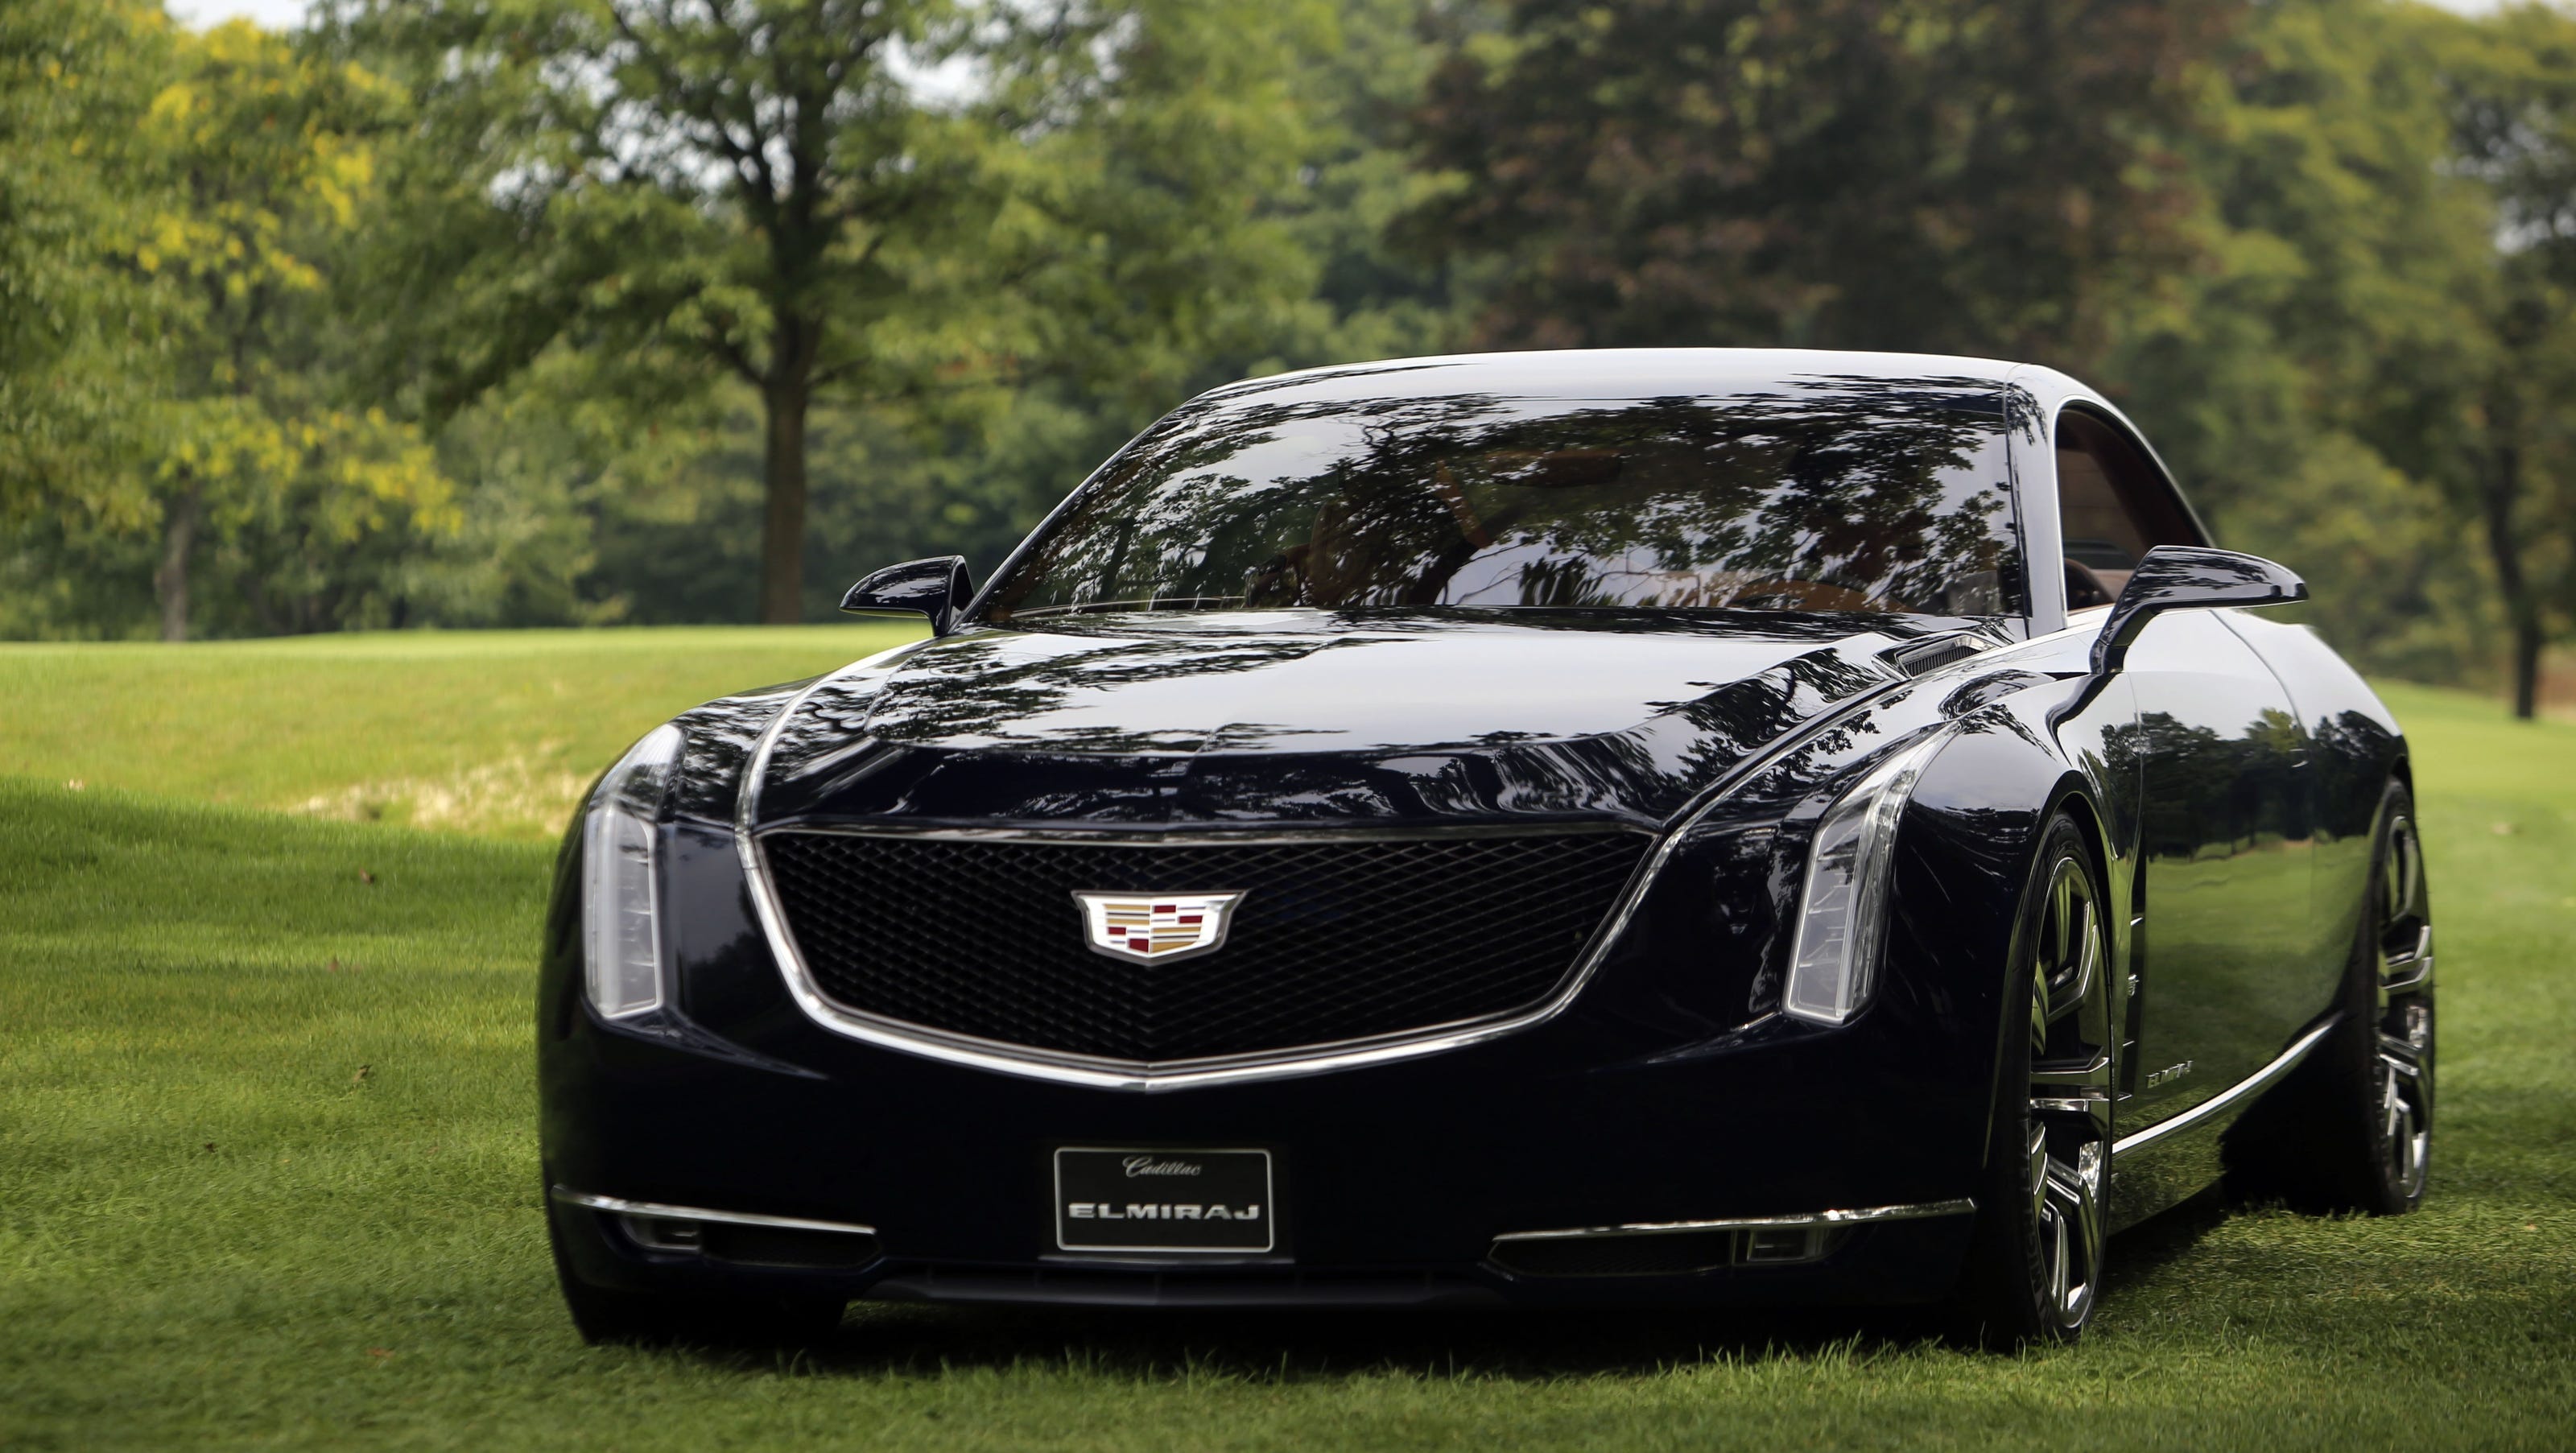 Cadillac will call its new flagship sedan the CT6